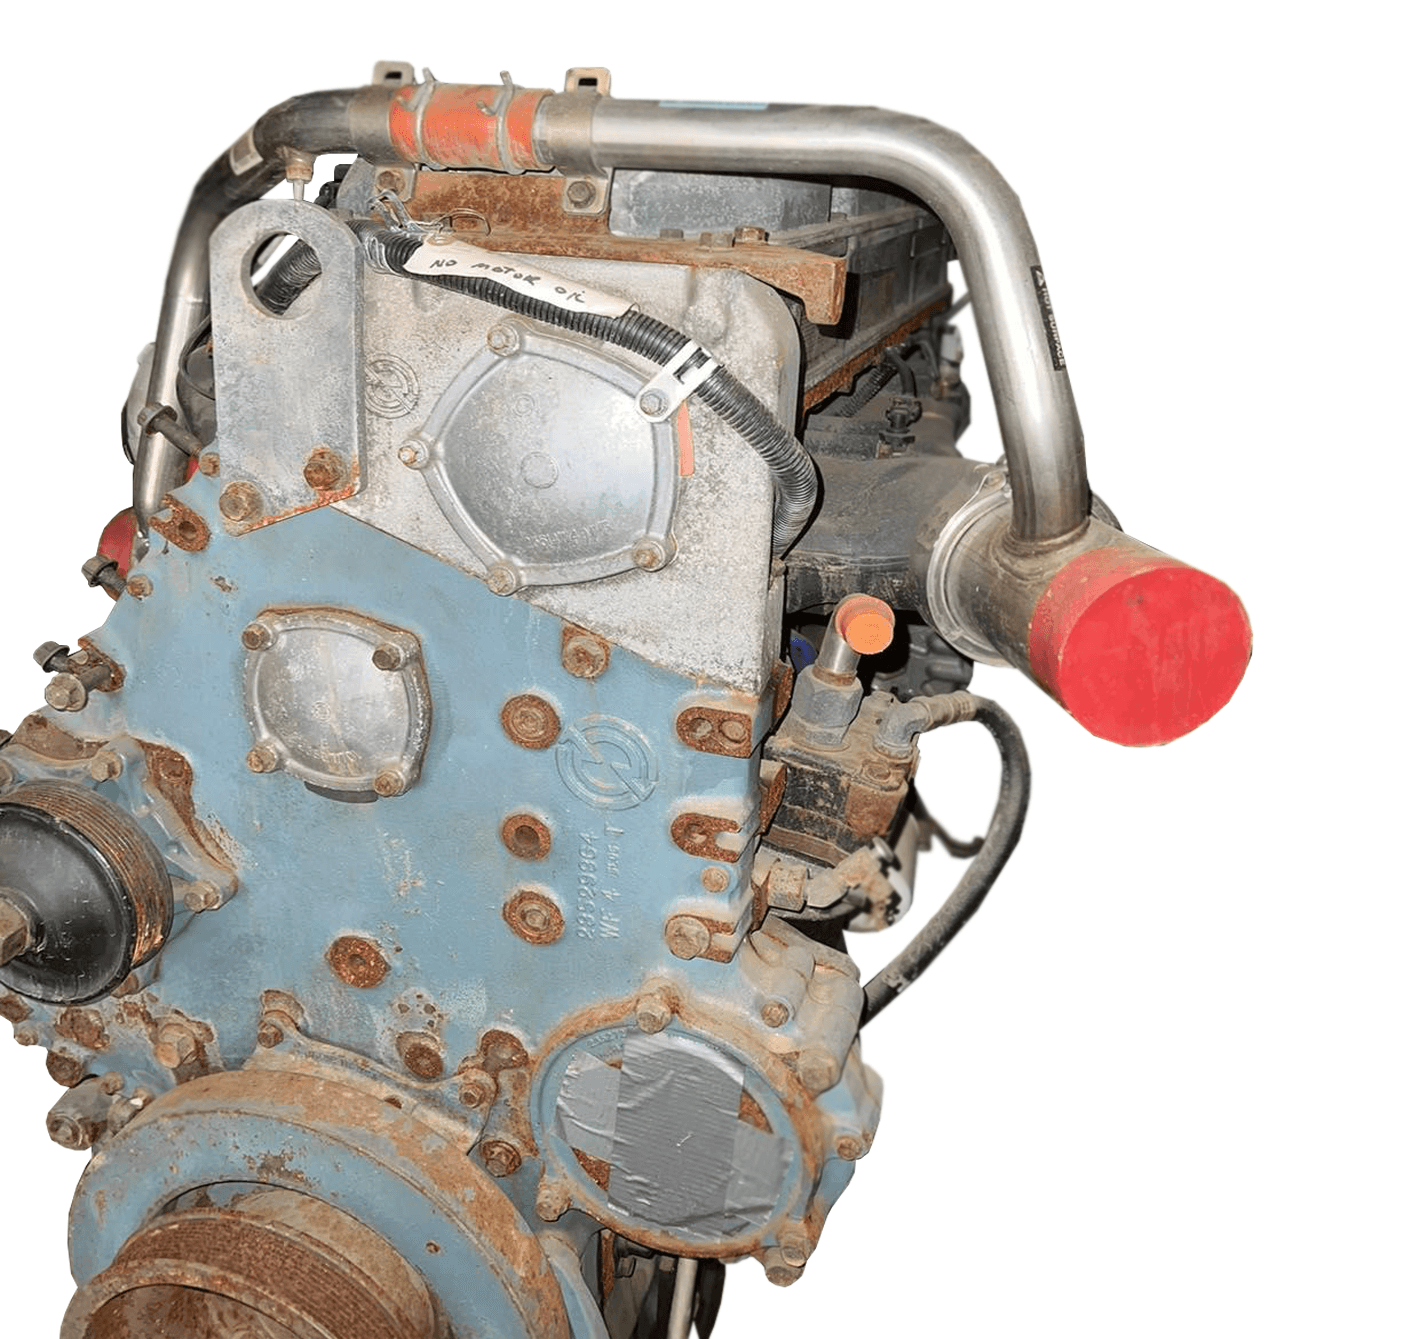 Genuine 2005 Detroit Egr Engine Series 60 Long Block 12.7L 455Hp 1800Rpm - ADVANCED TRUCK PARTS